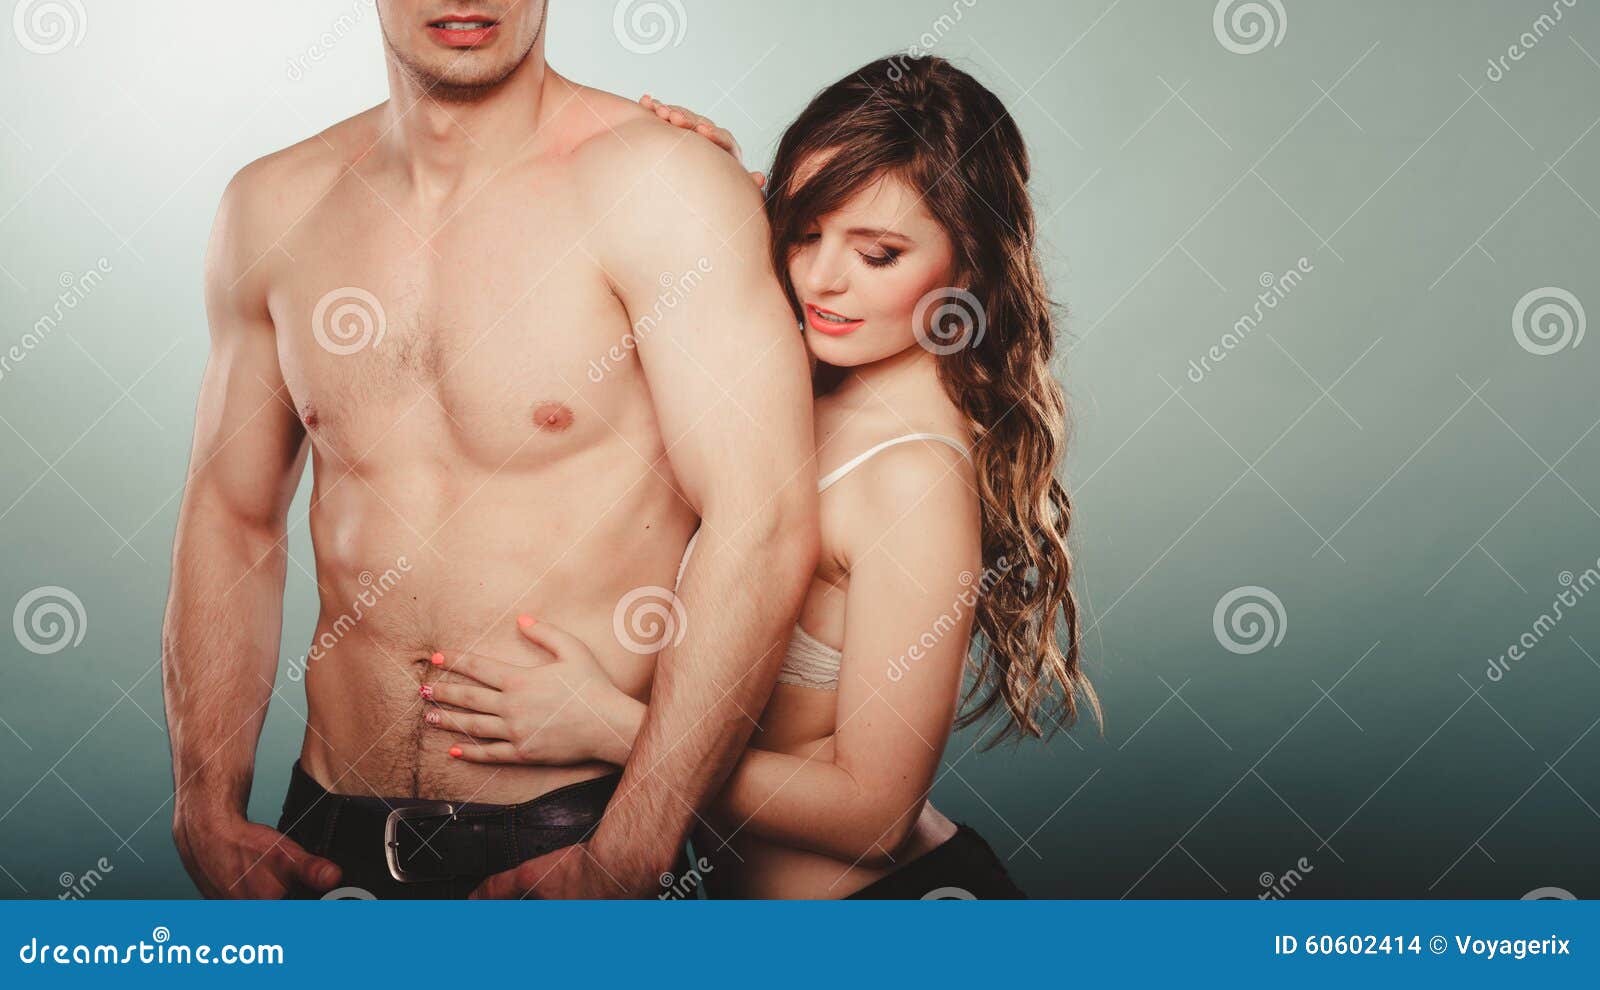 Beautiful naked women couples